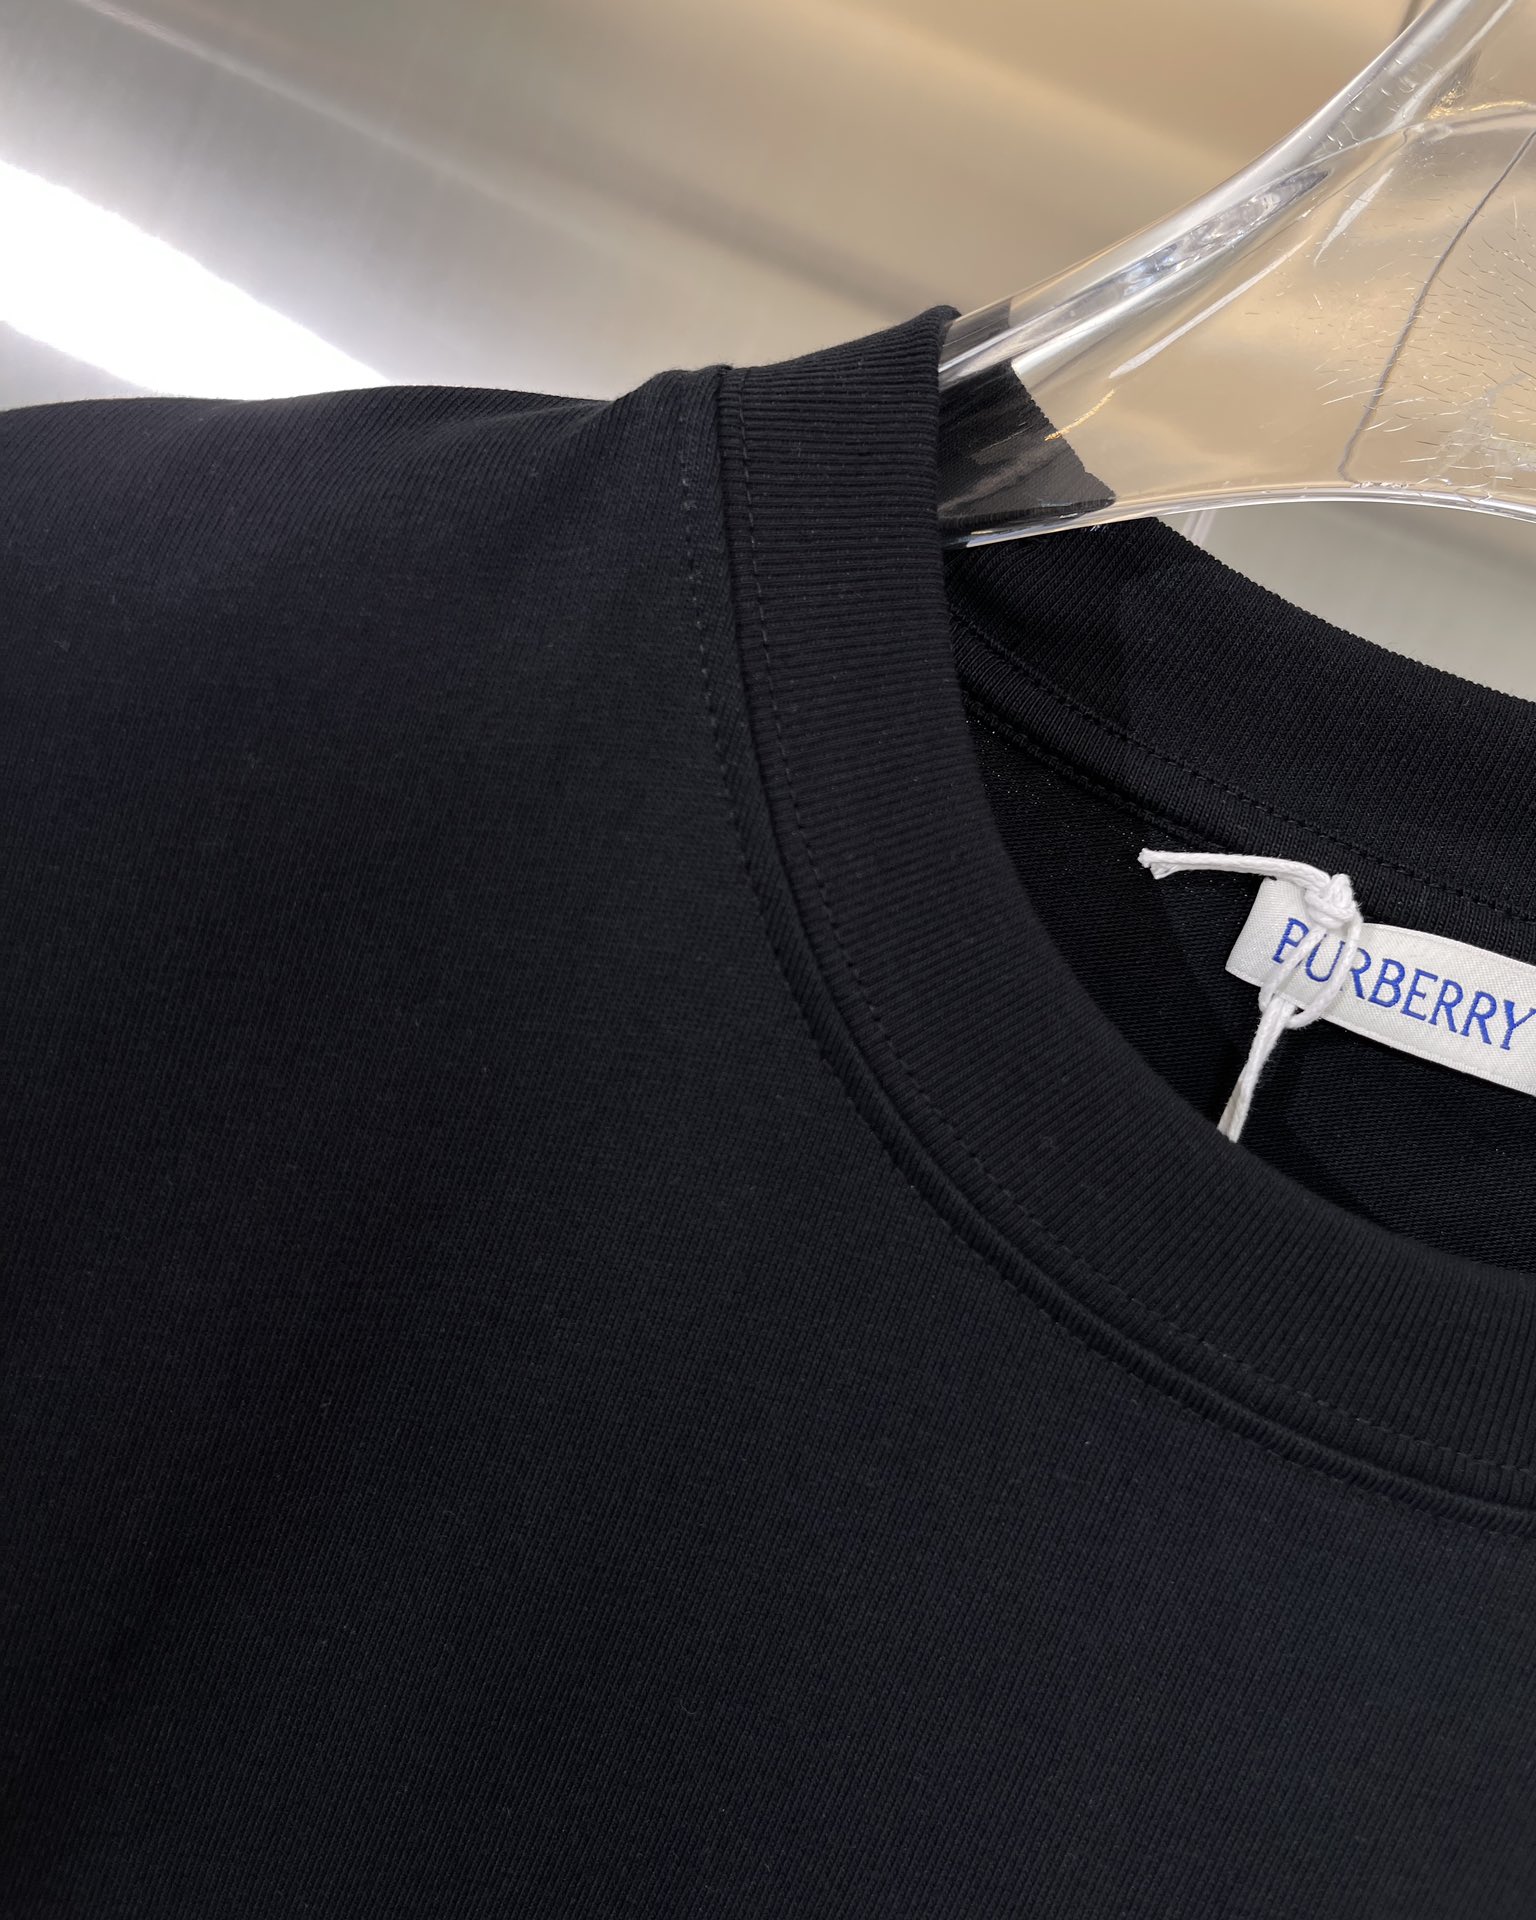 Burberry博柏利BBR款式男女同款短袖T恤衫T-shirt选用平织棉面料打造装饰丝网印花工艺呈现的